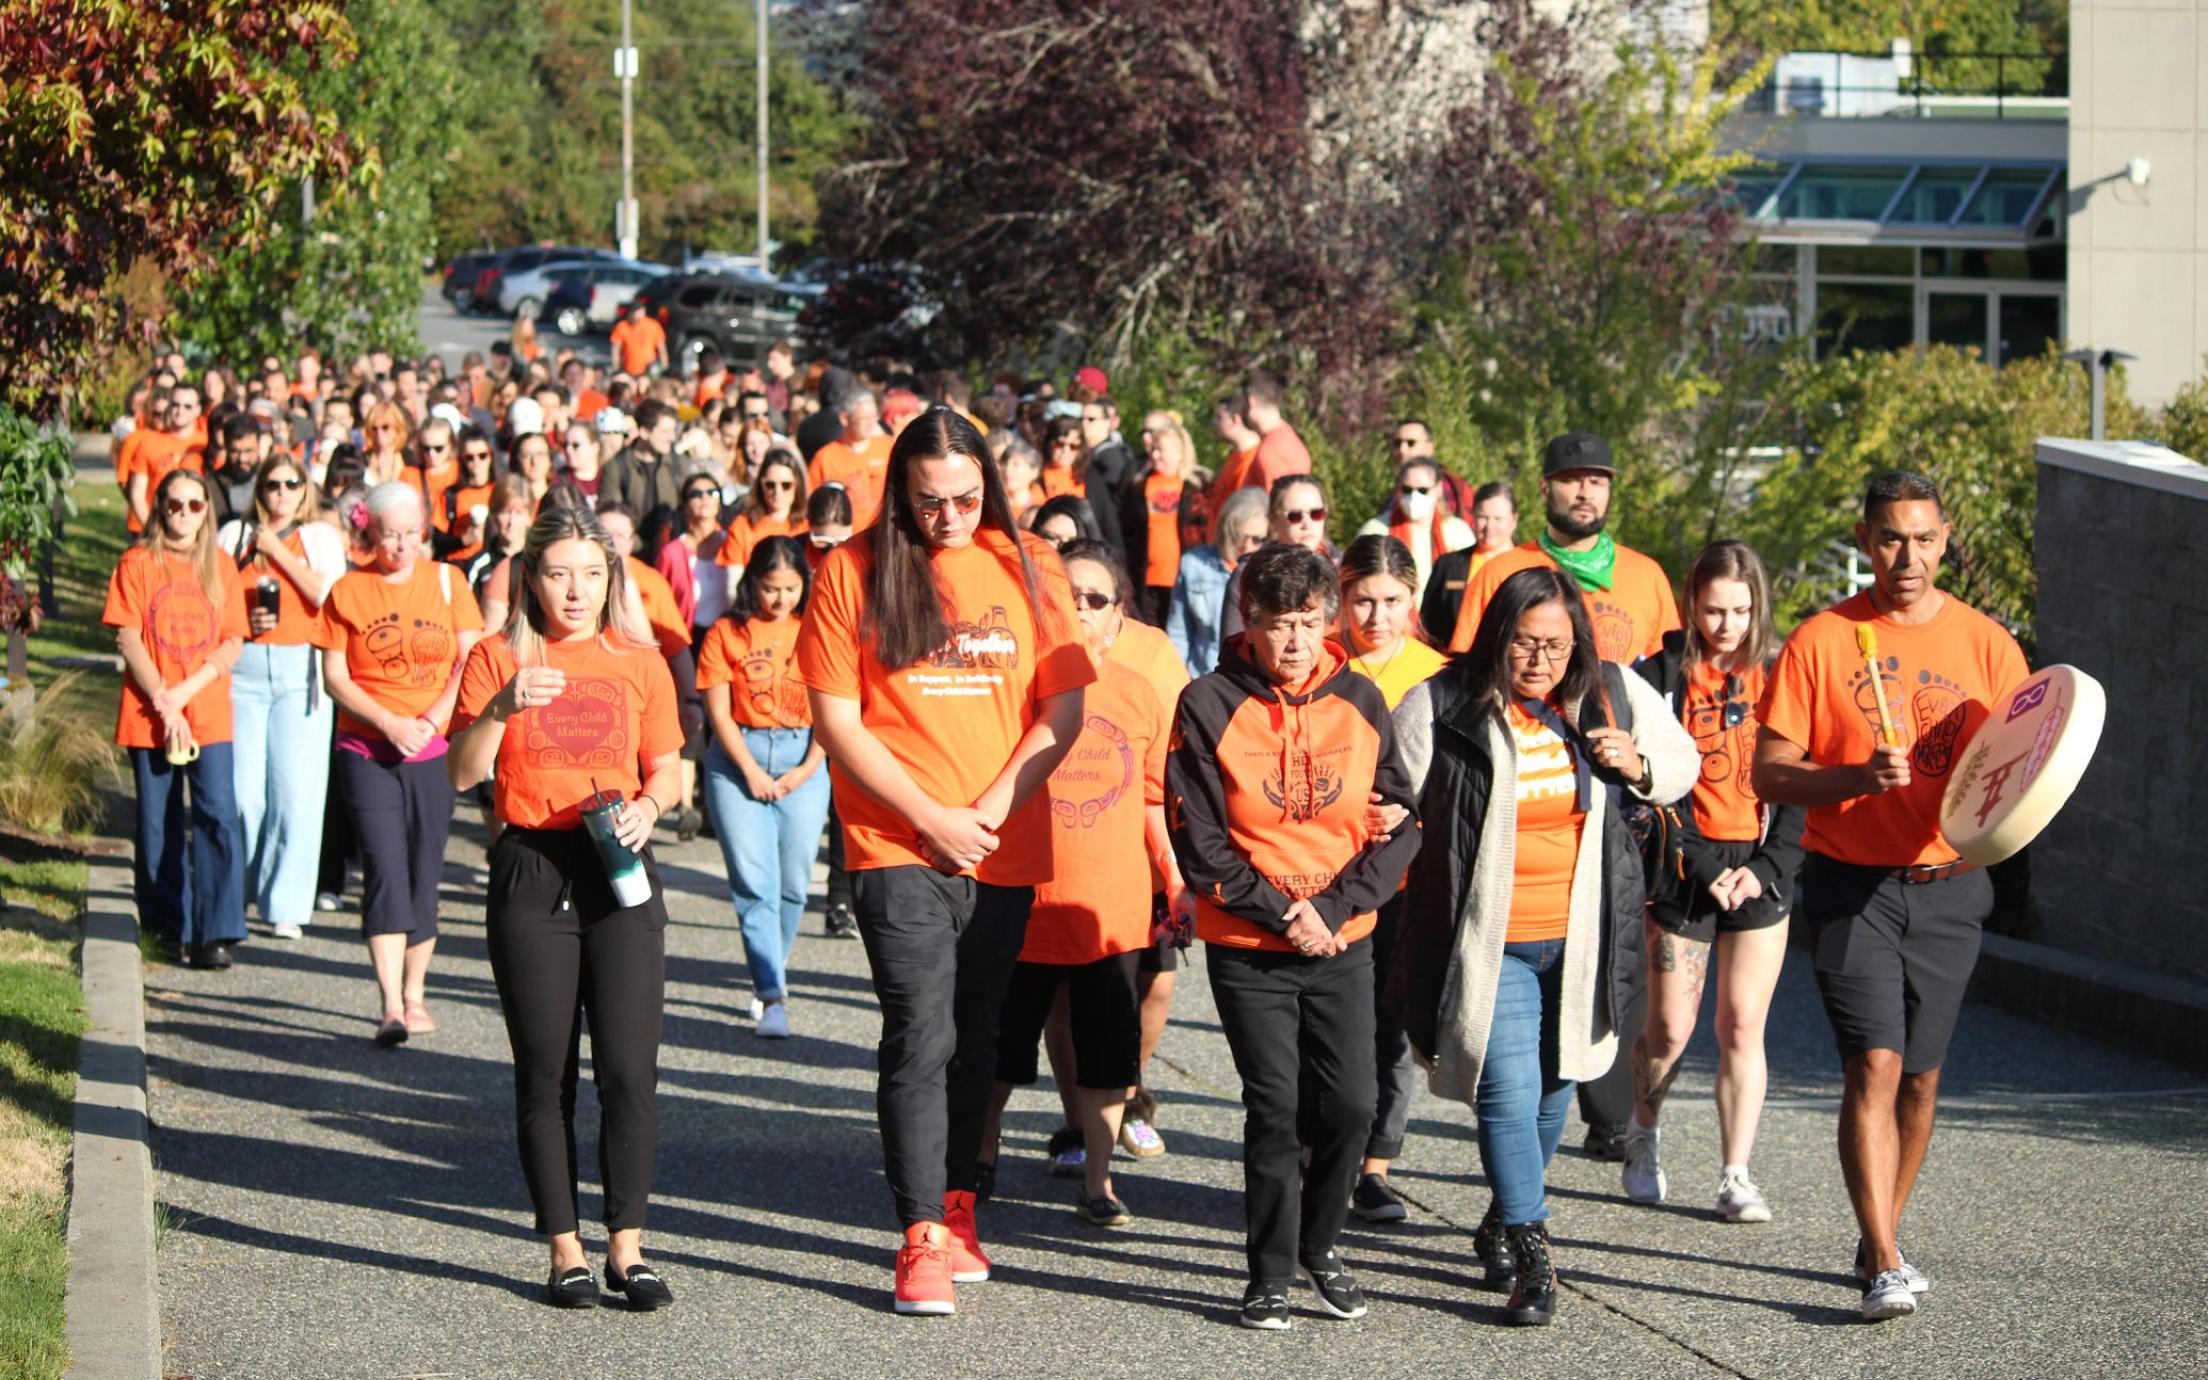 A group of people wearing orange shirts walk together at VIU's Nanaimo campus